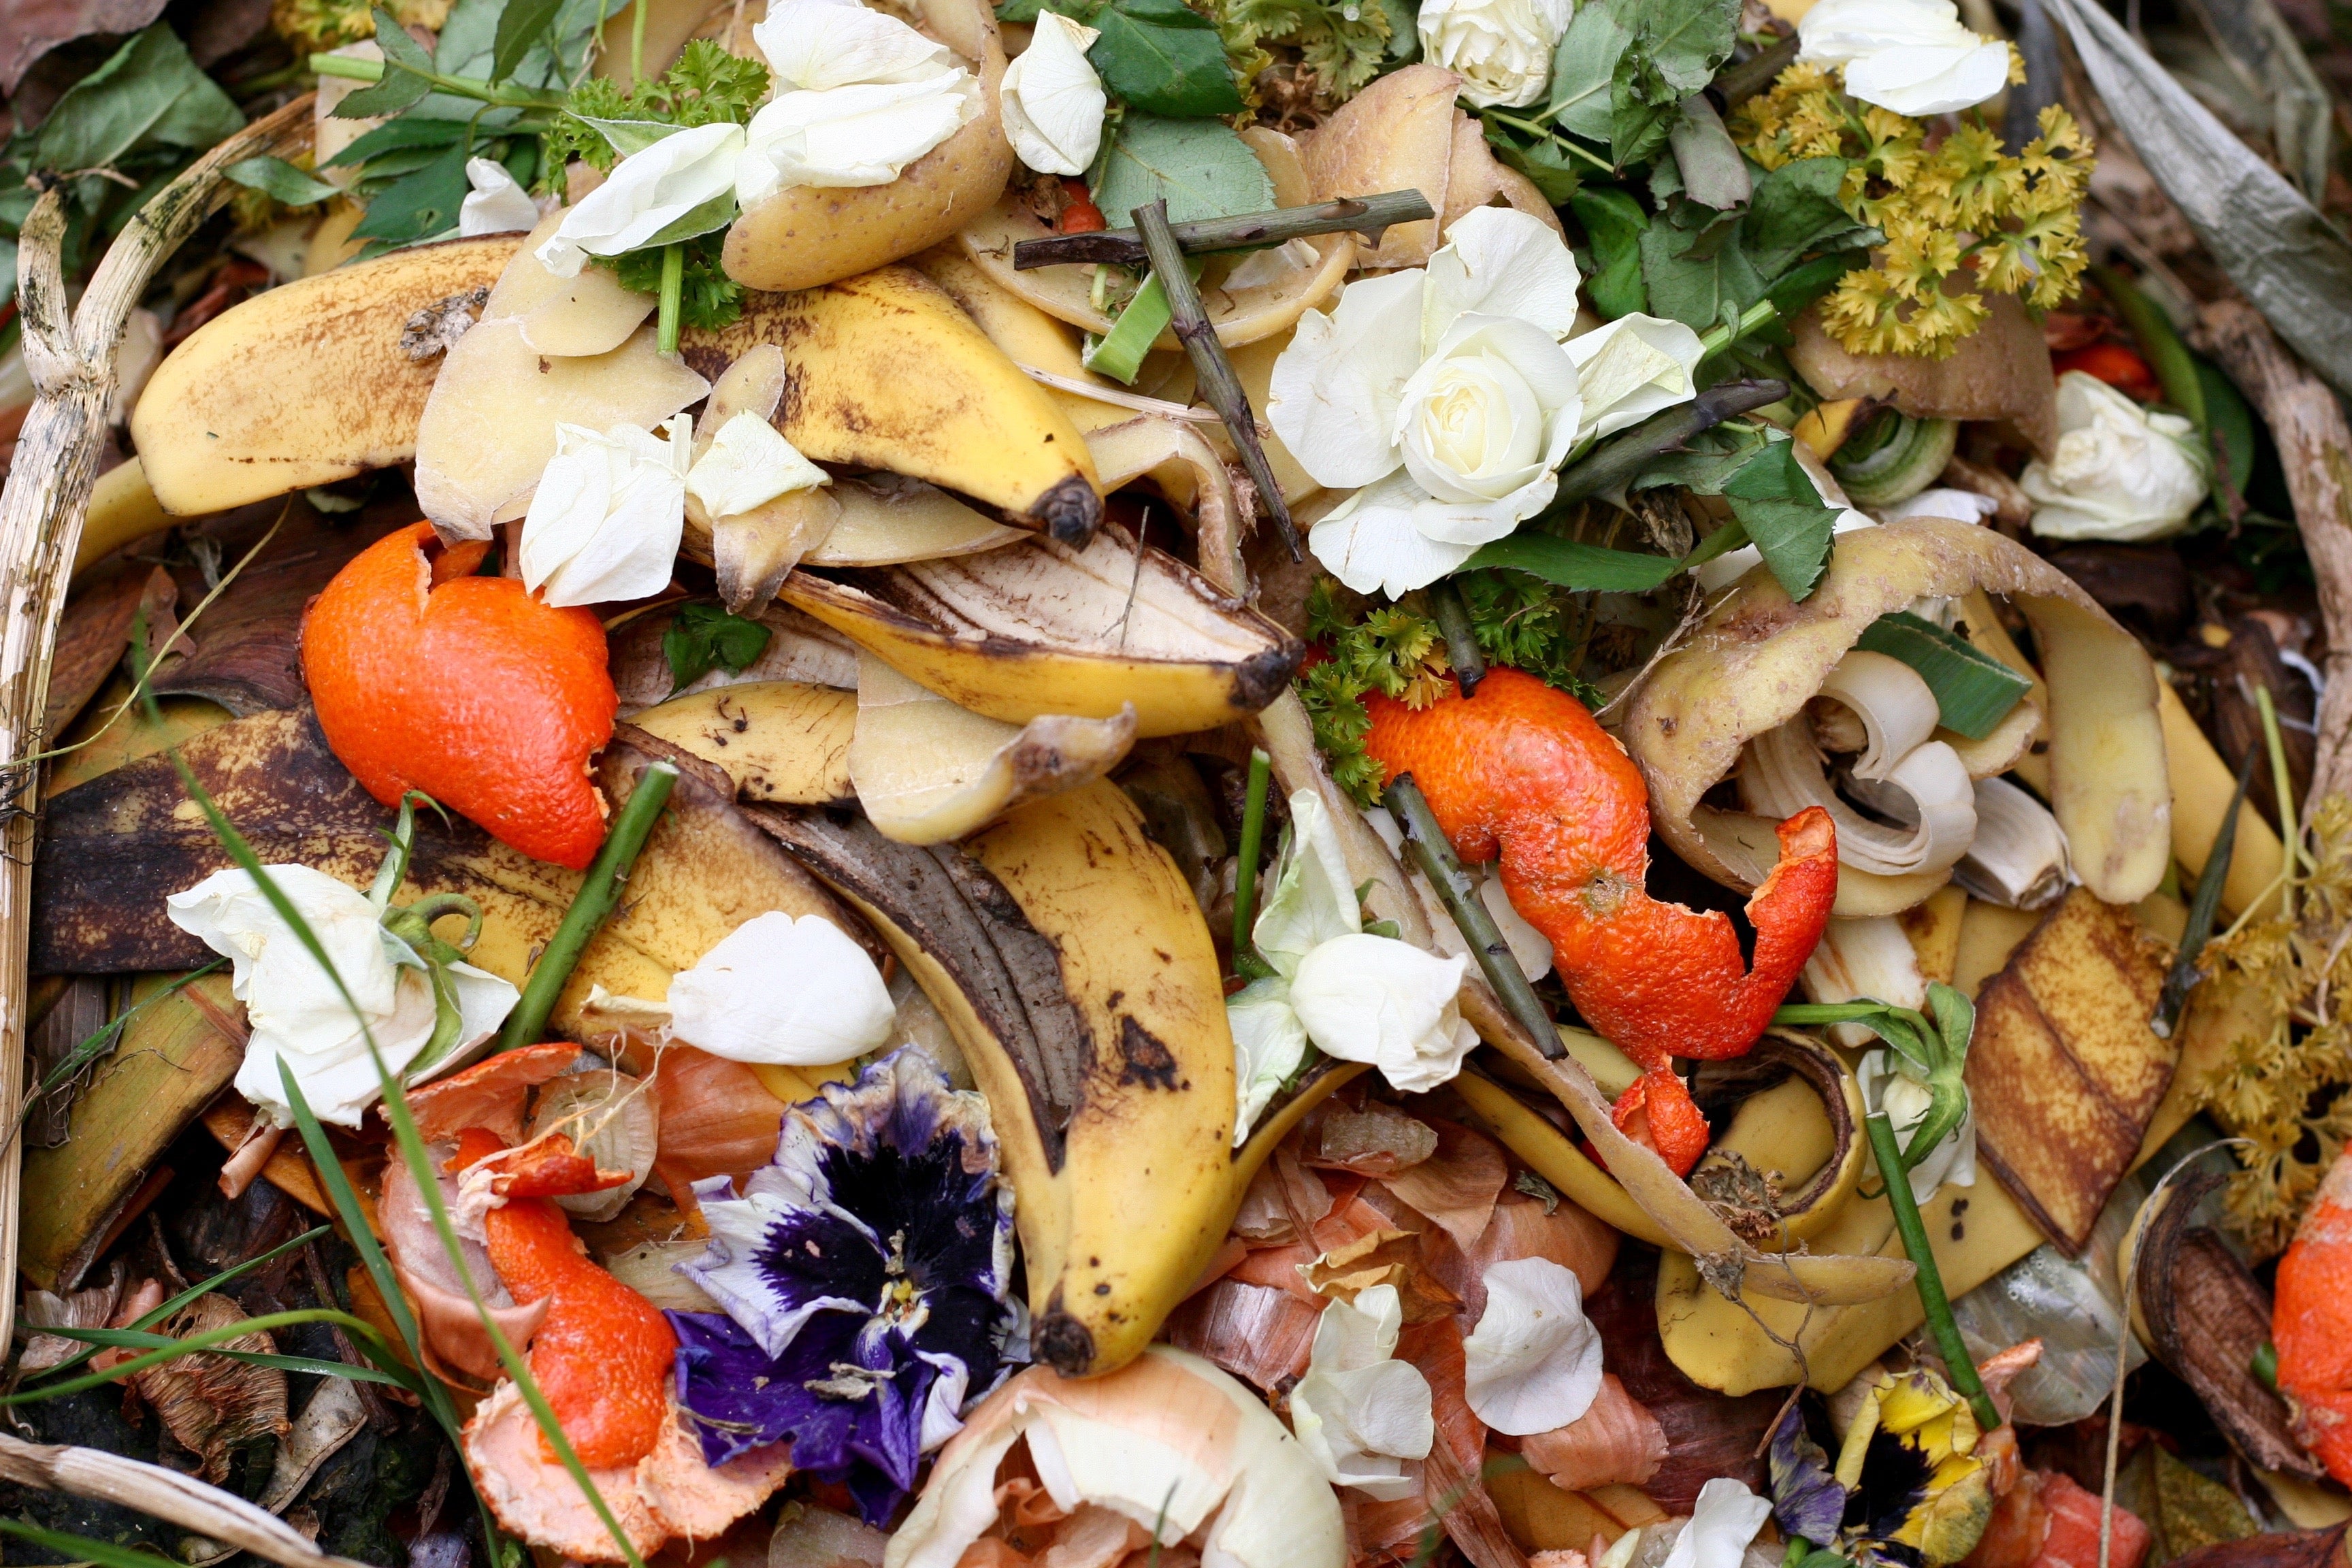 Home Composting – A super easy guide